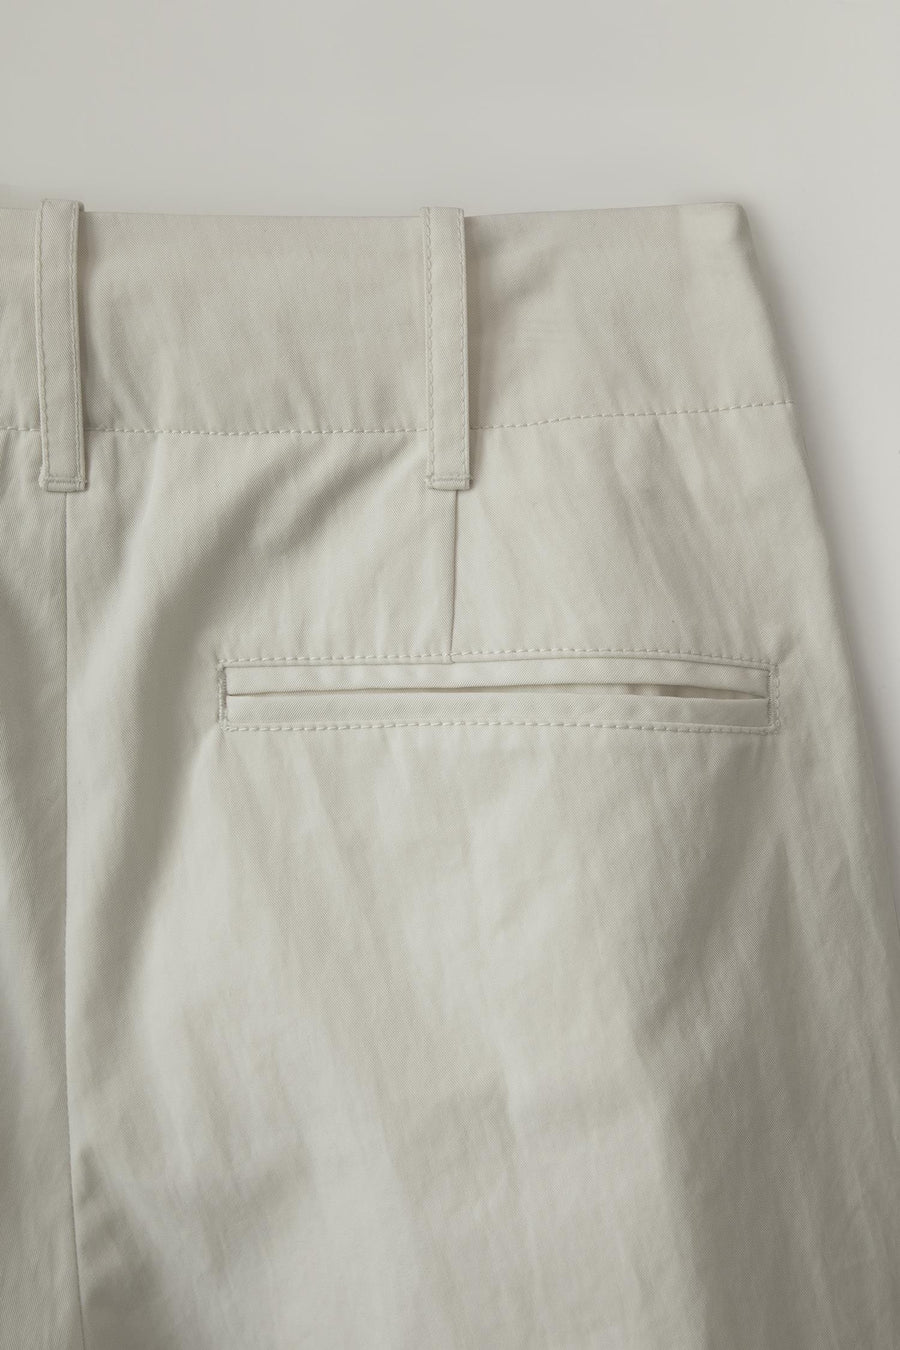 Mailo Cotton Pants Ivory